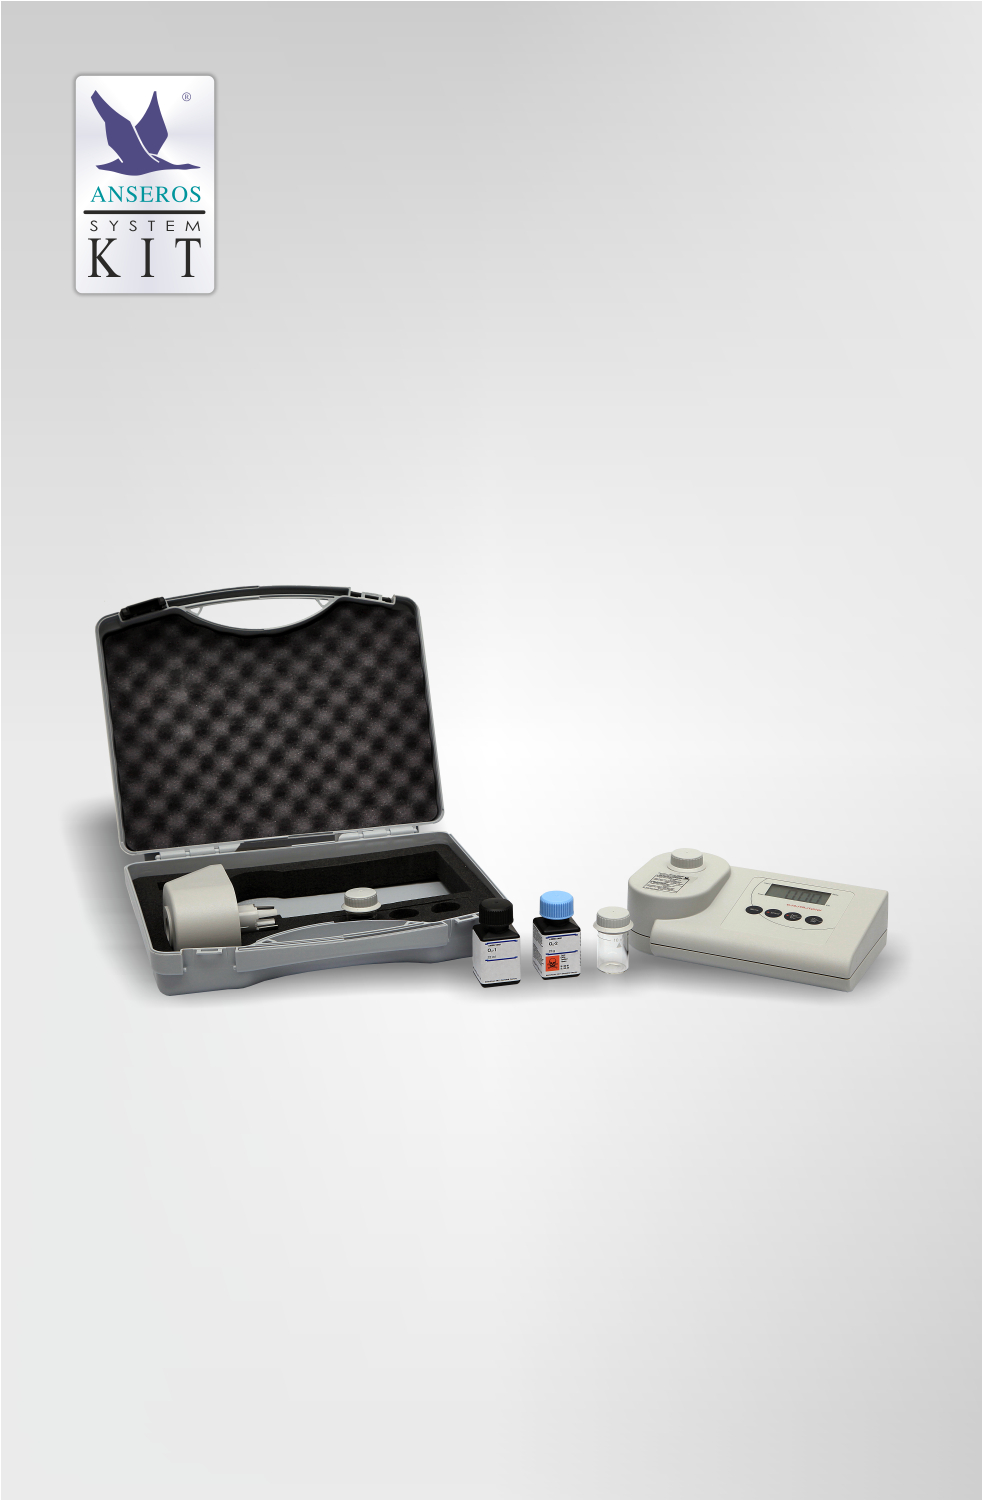 Ozone water test kit 77013